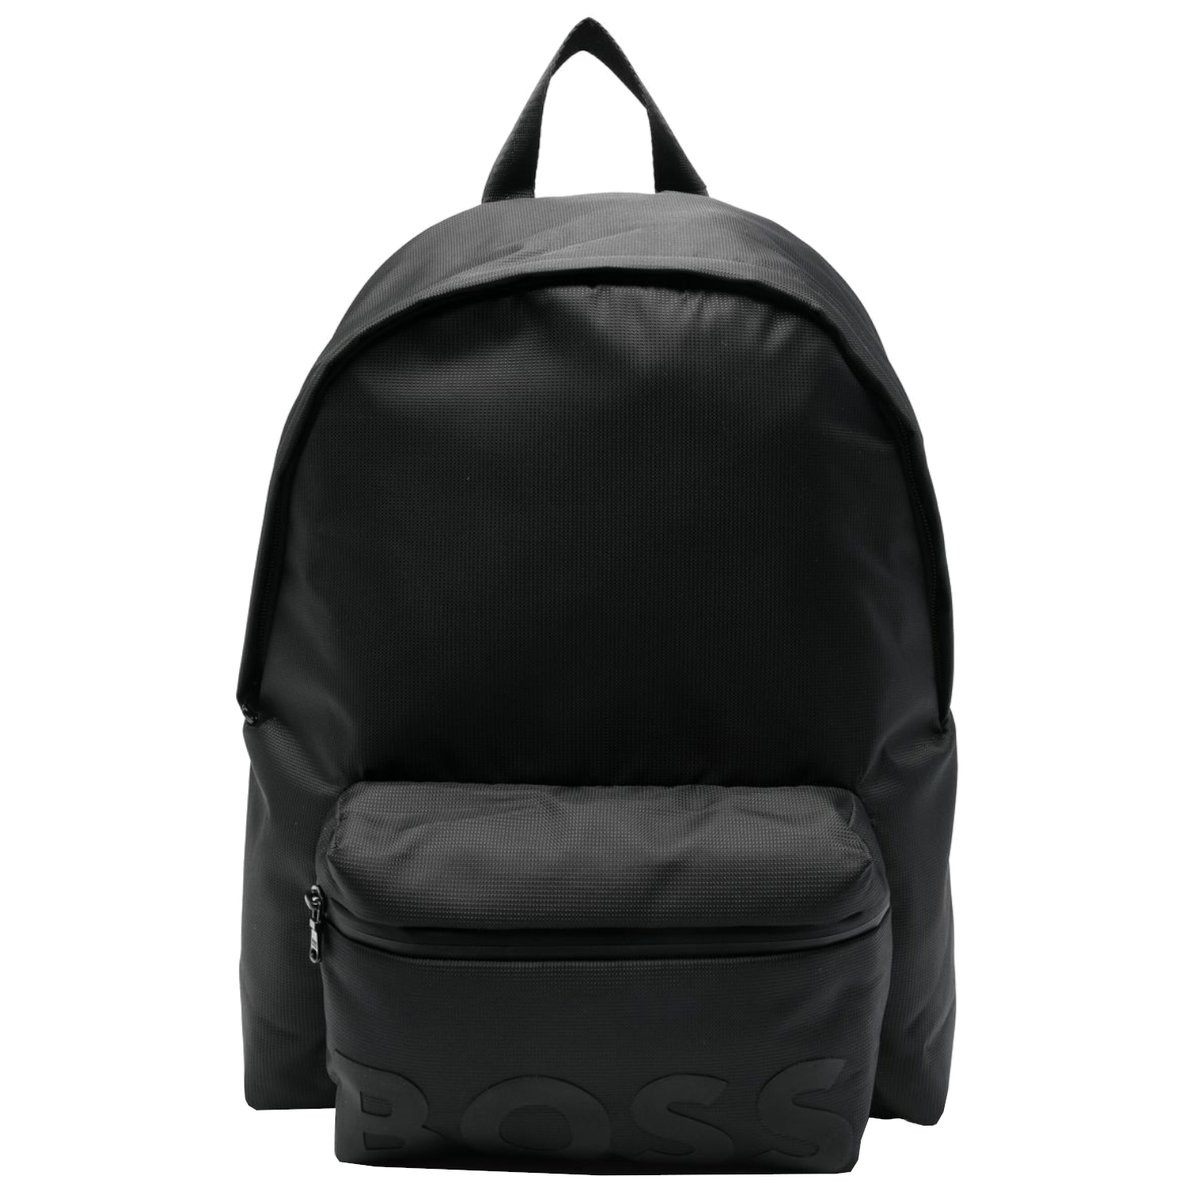 Zdjęcia - Plecak BOSS Logo Backpack J20364-09B, Czarne , pojemność: 15 L 